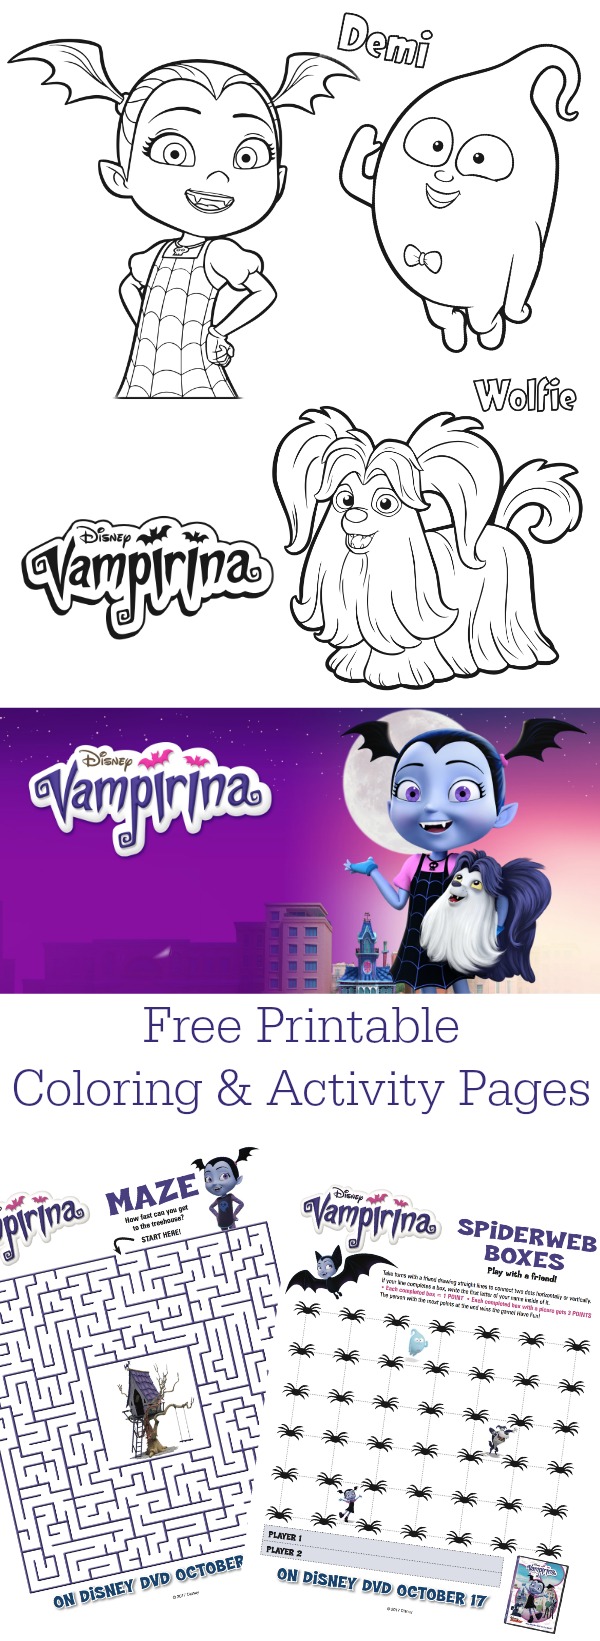 Disney Junior Vampirina Coloring Pages + DVD Giveaway